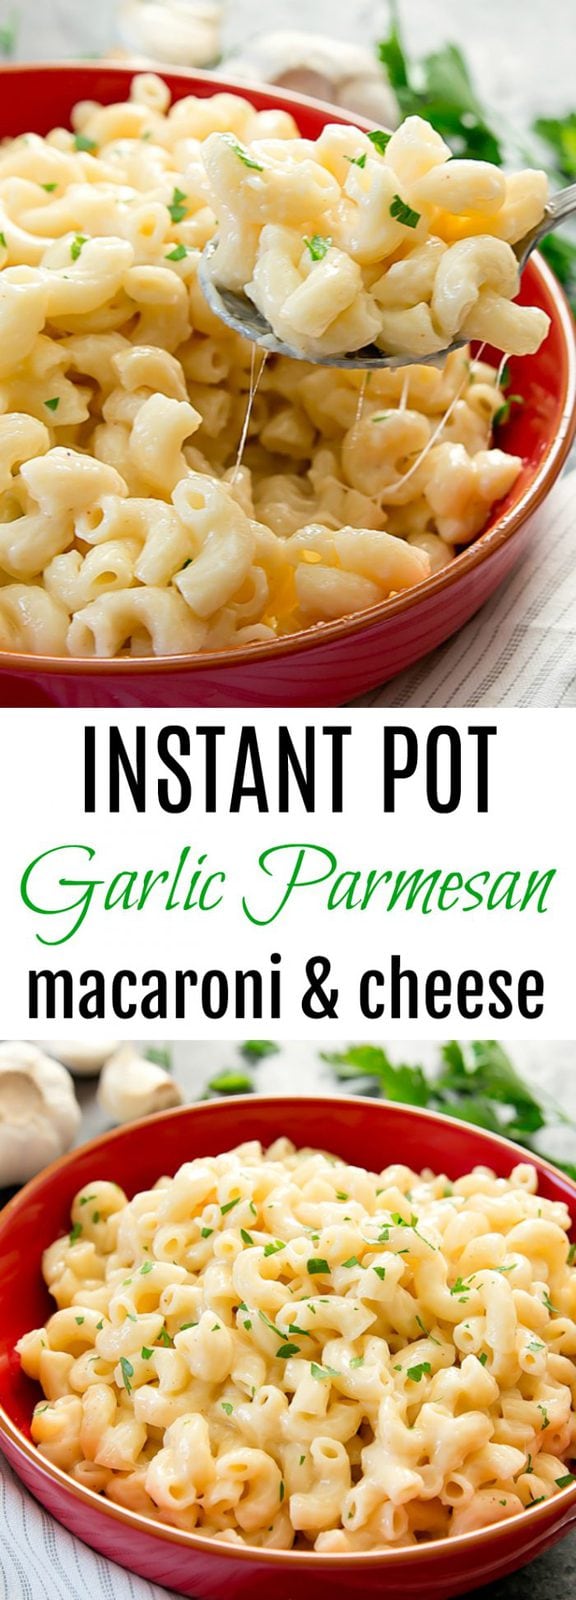 Instant Pot Garlic Parmesan Macaroni and Cheese